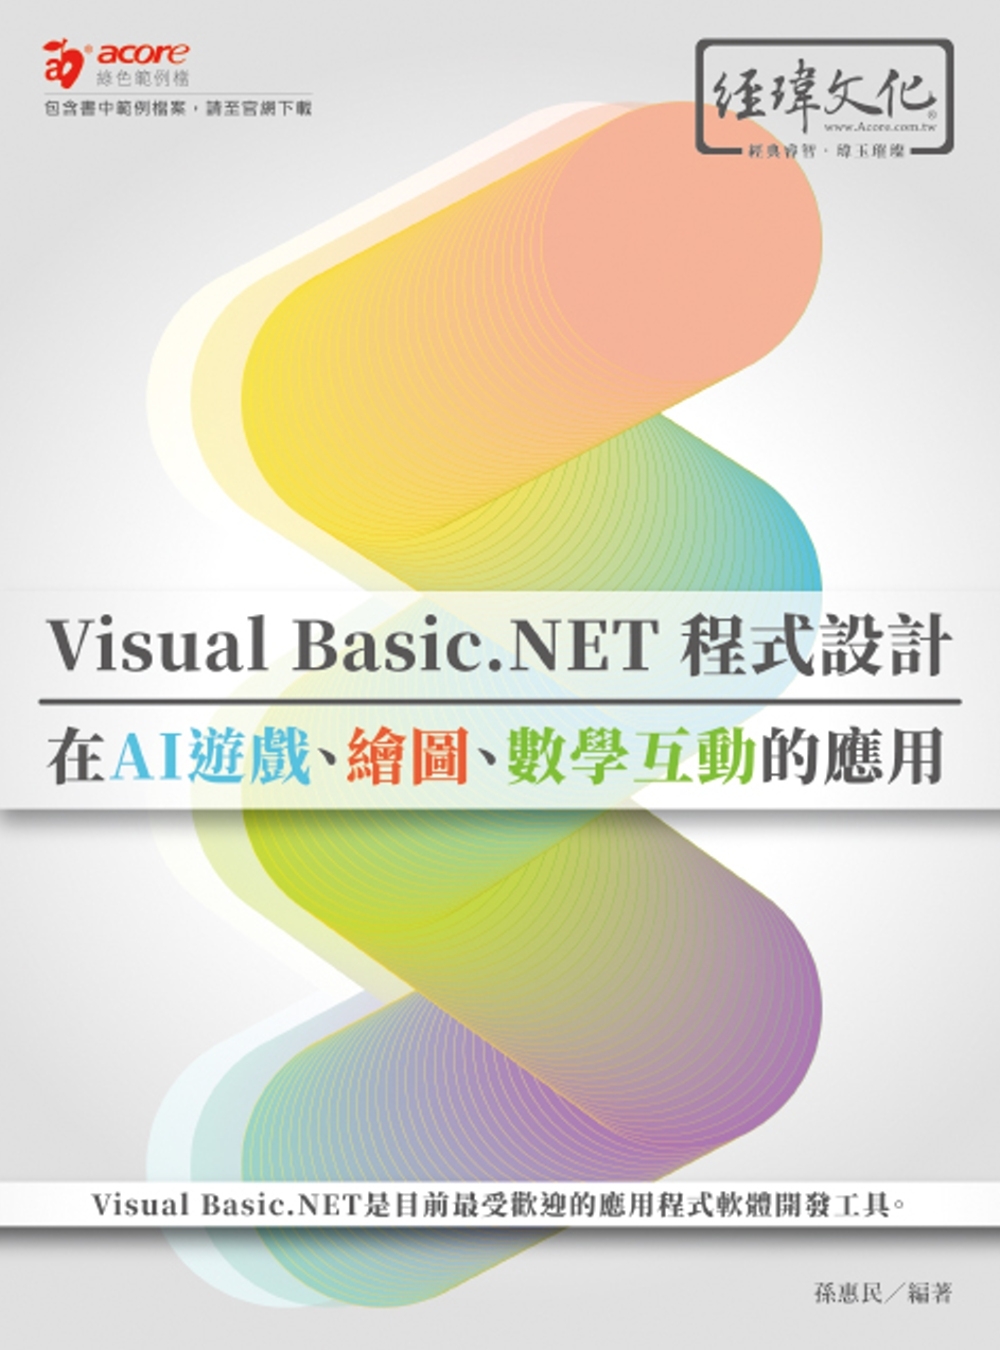 Visual Basic.NET程式設計在AI遊戲、繪圖、數...